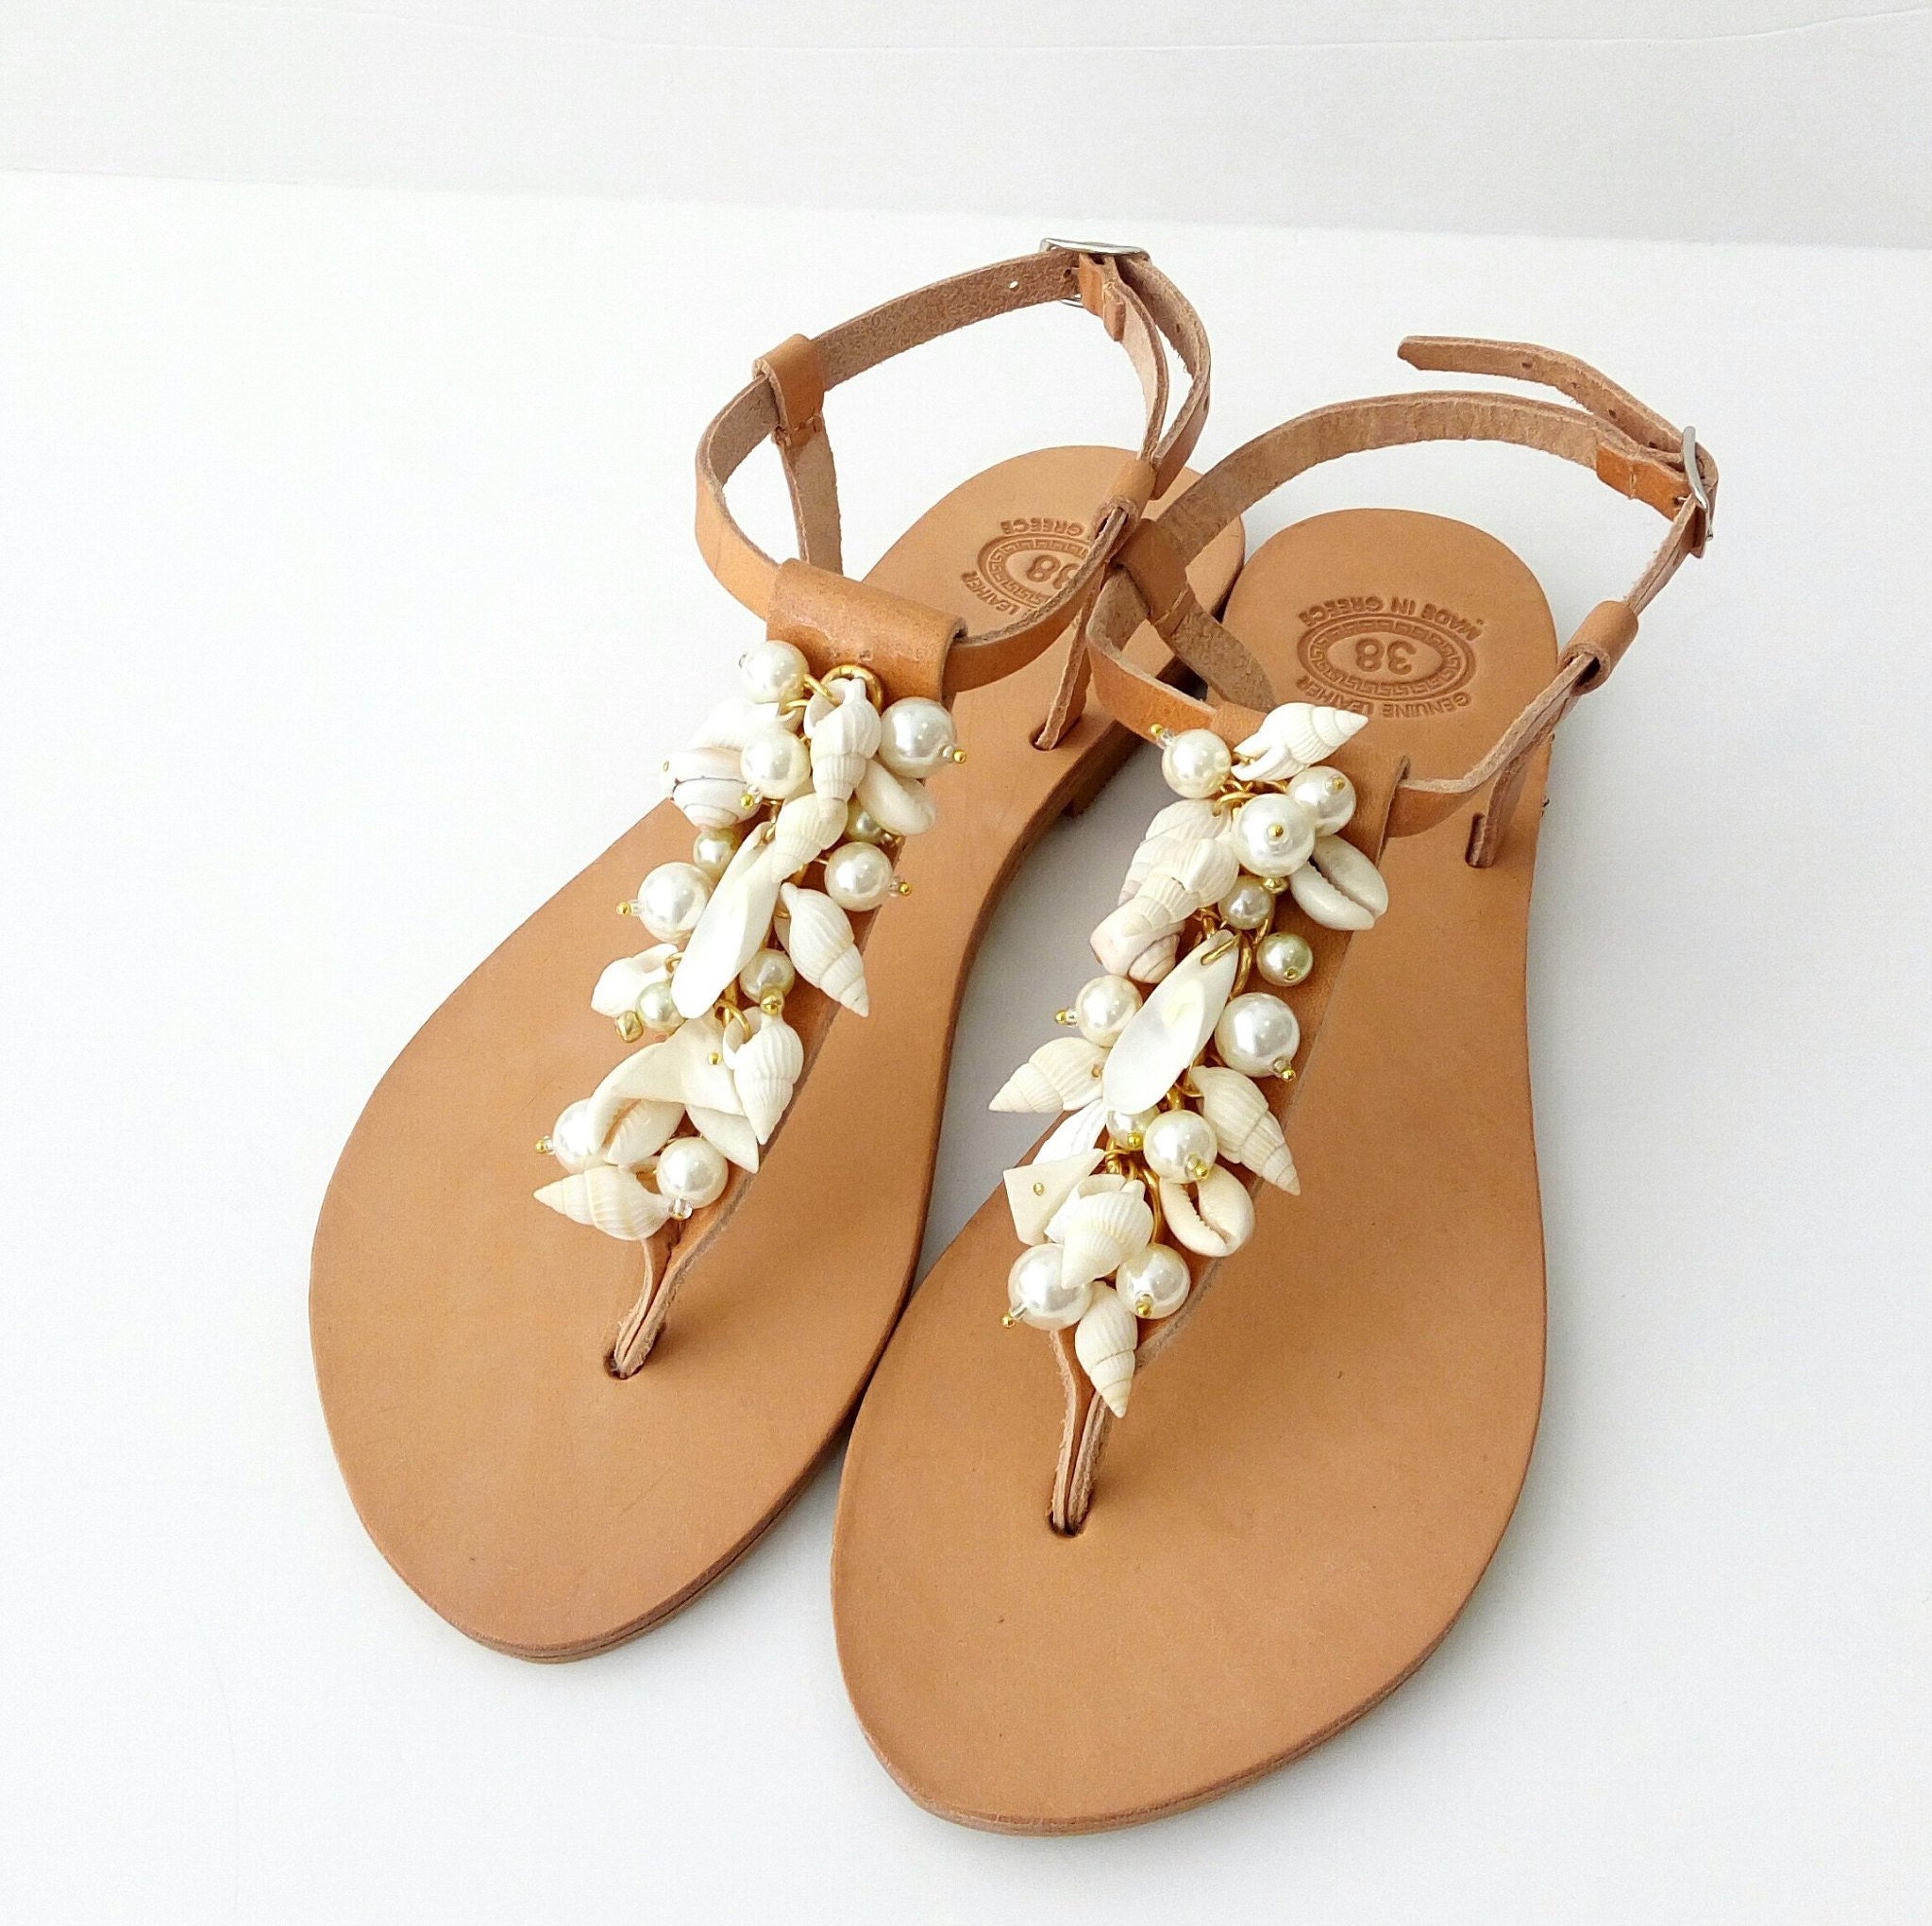 Sea sandals